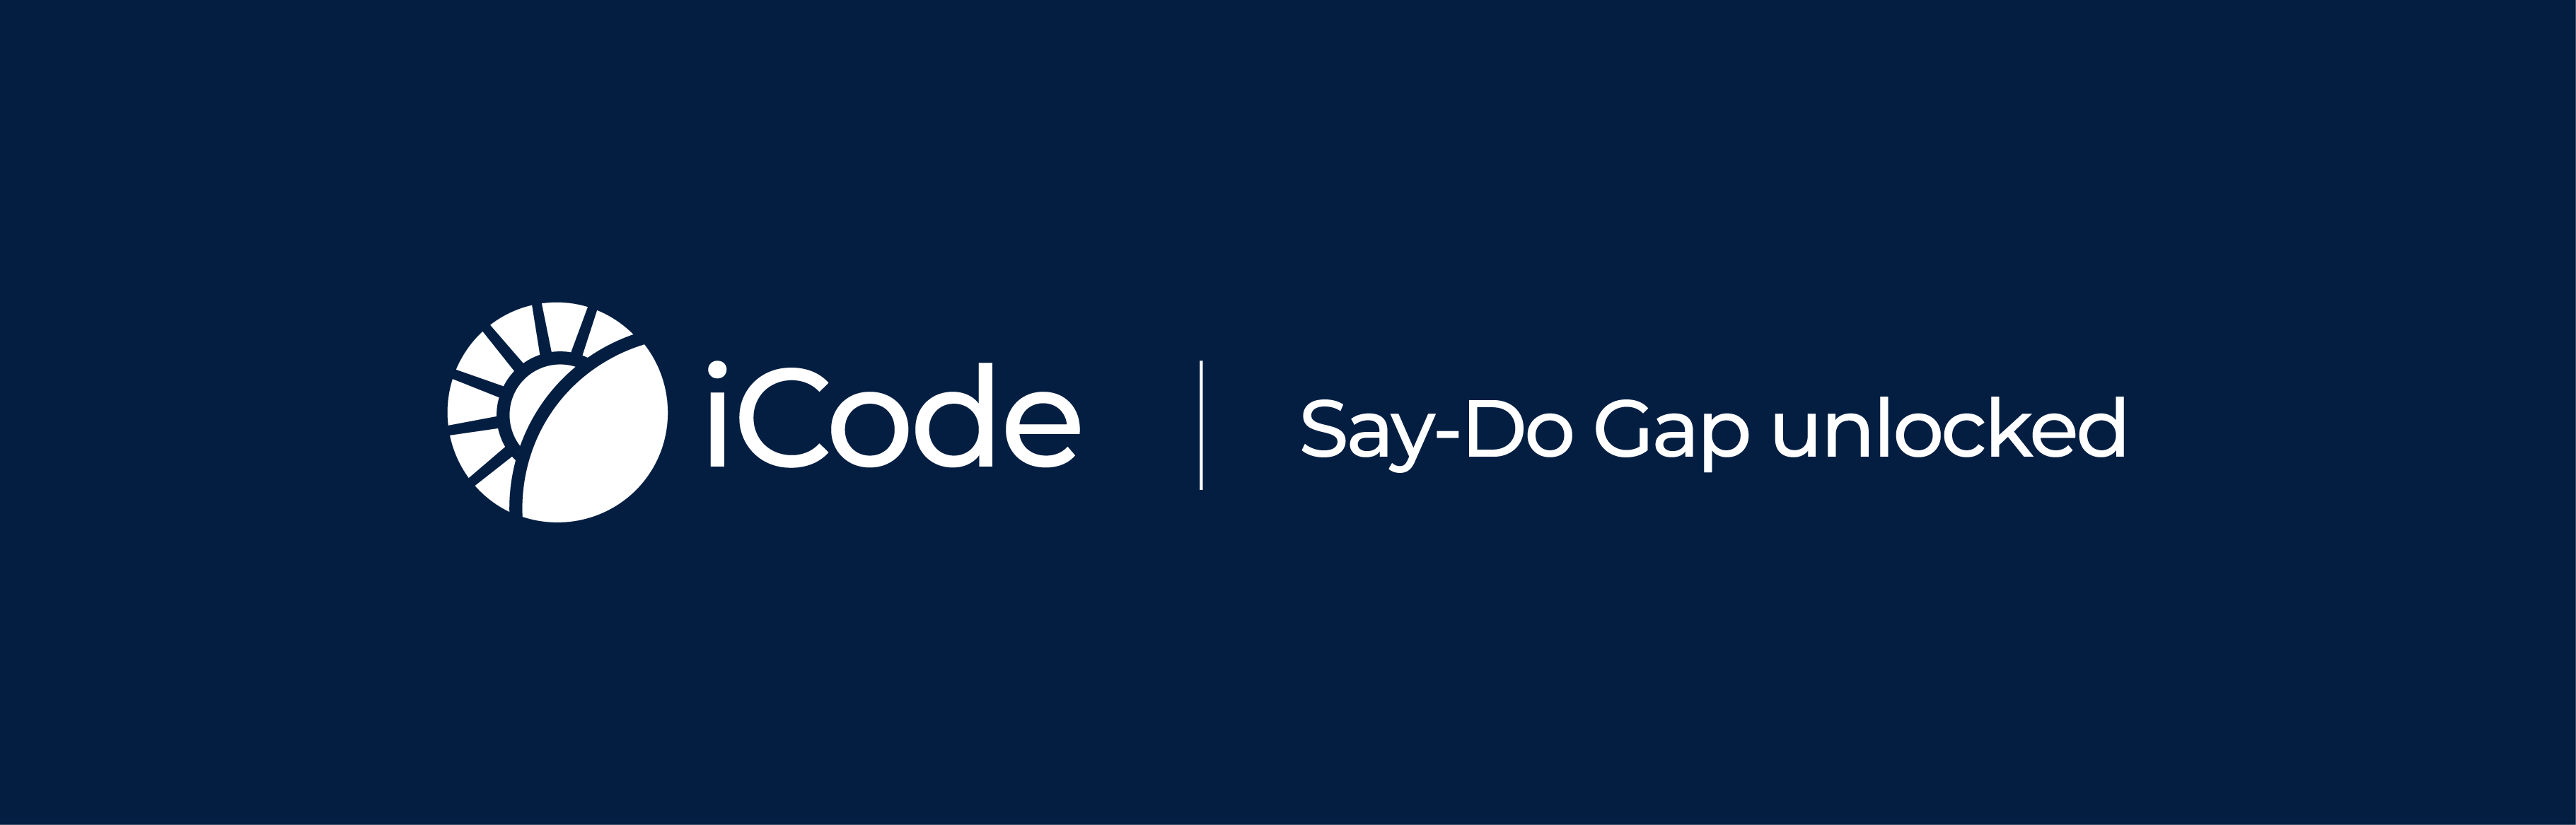 iCode Say-Do Gap unlocked